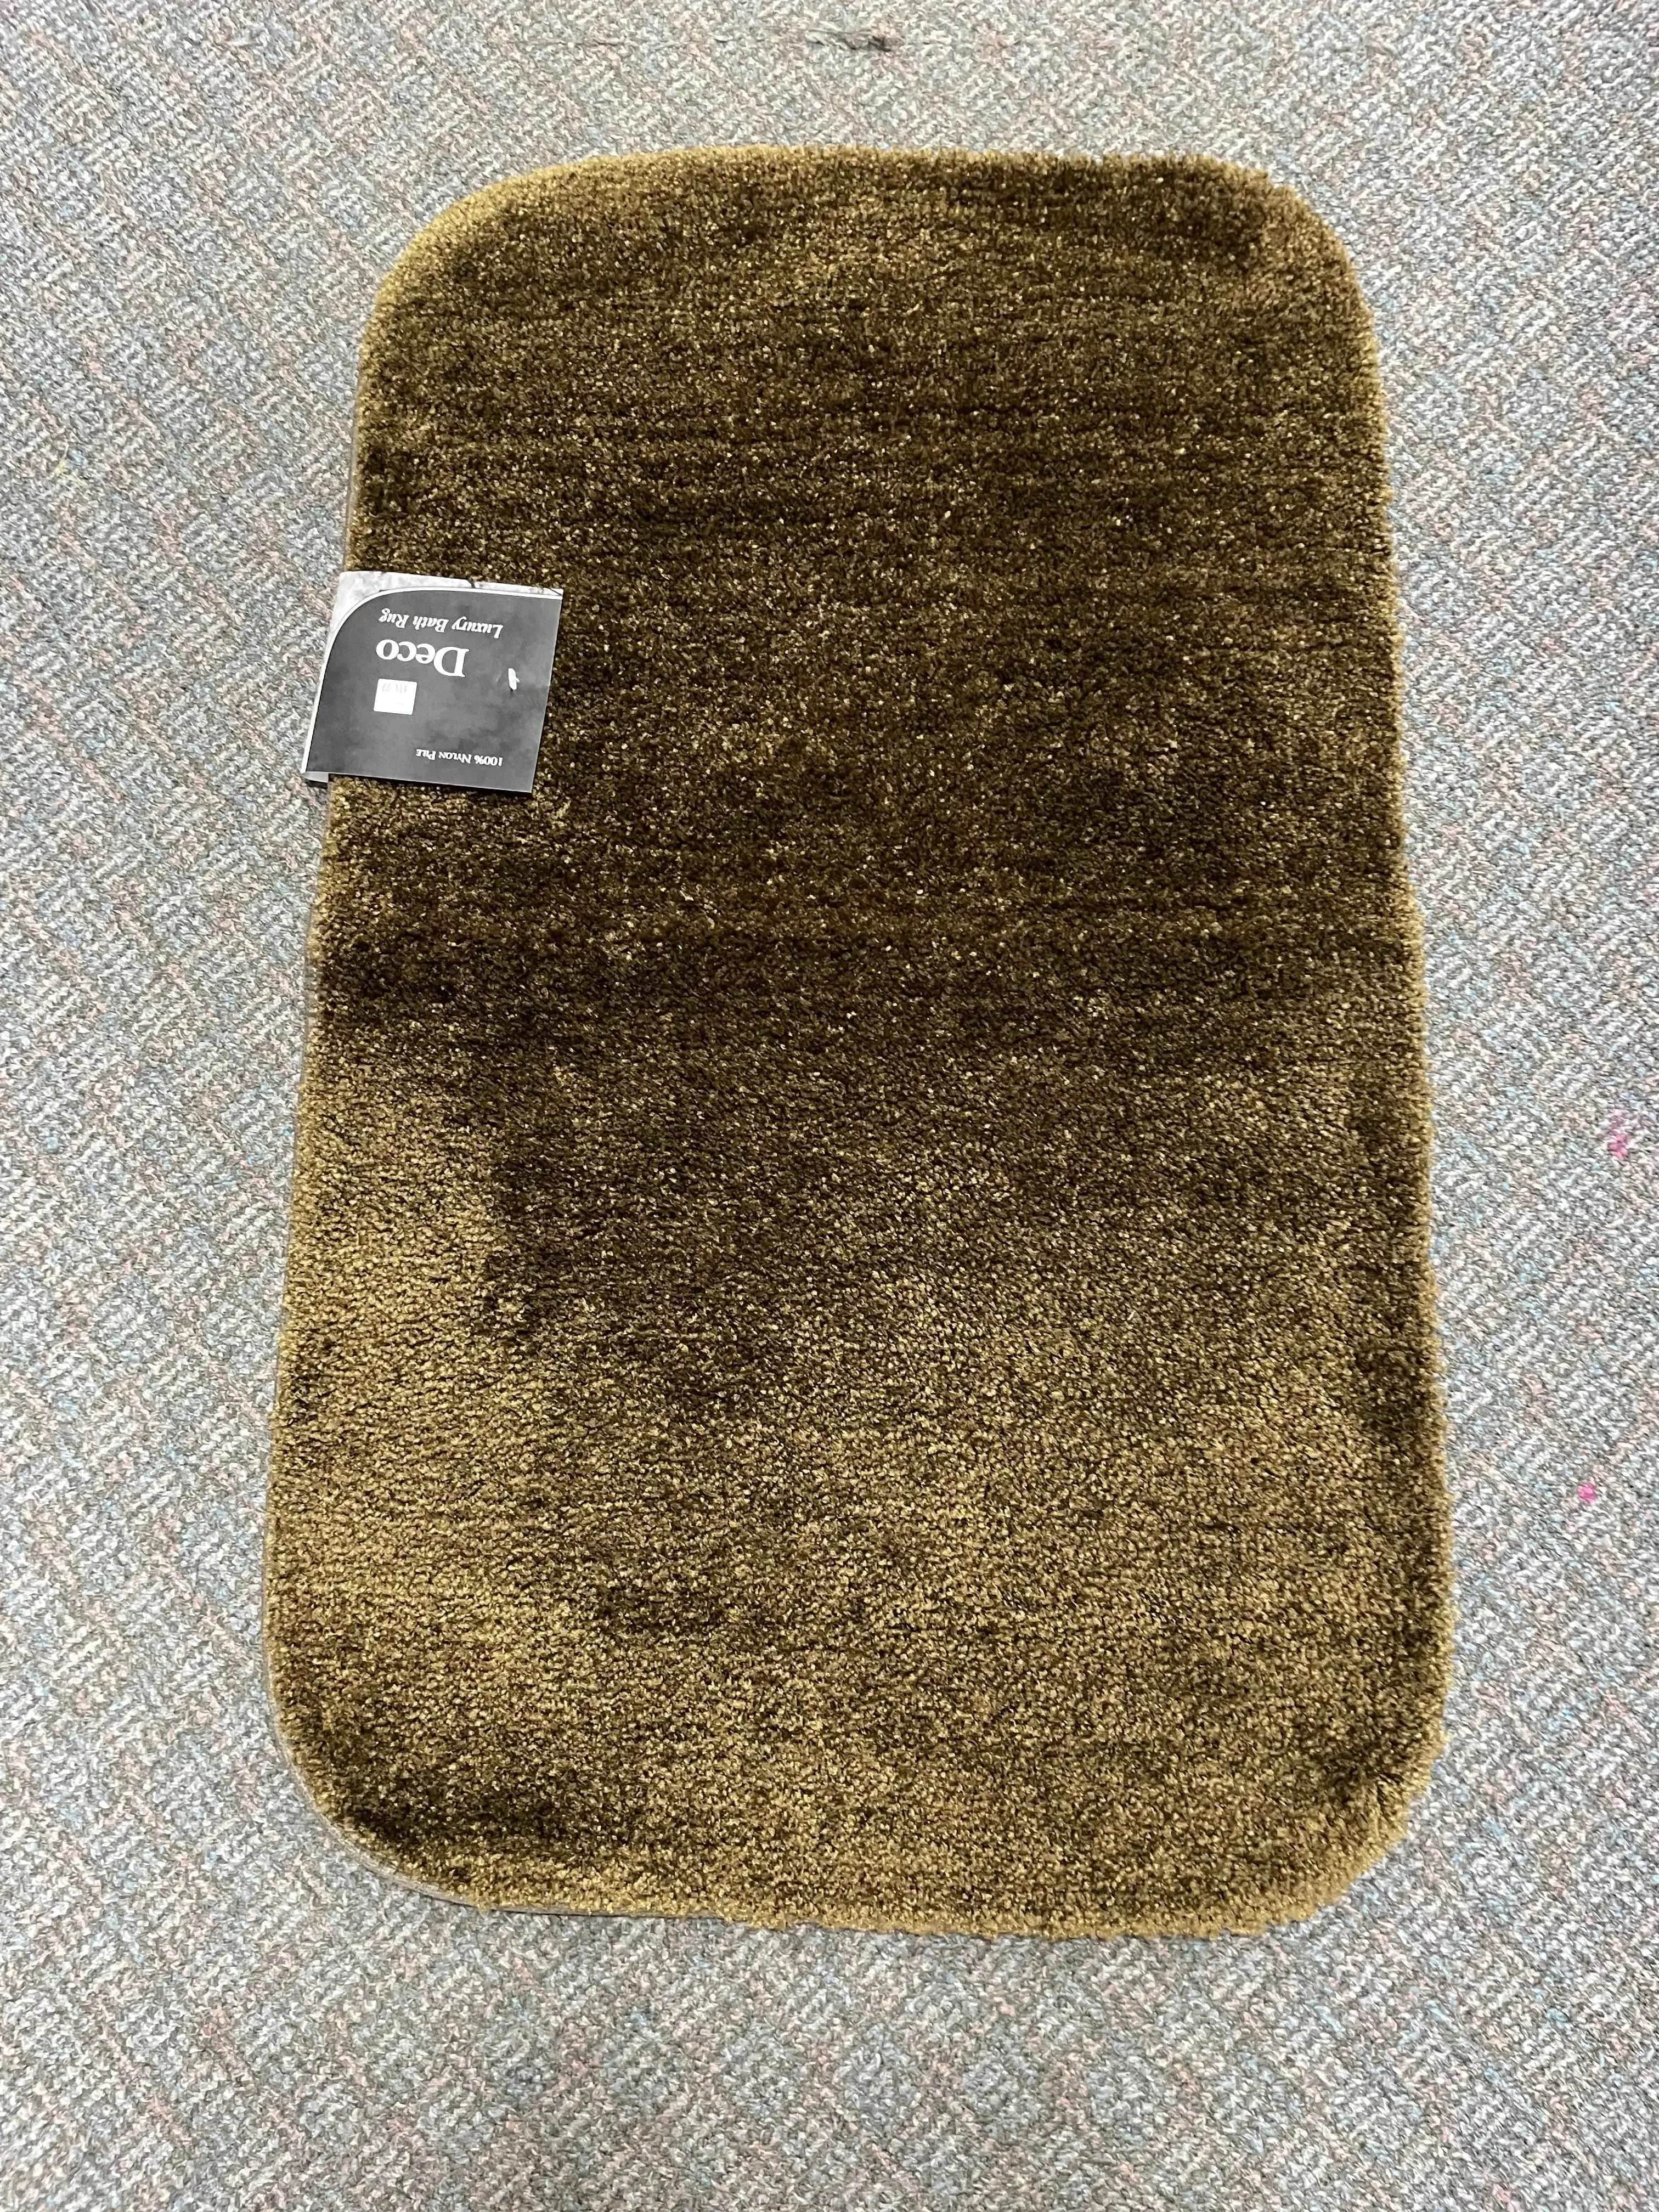 Linen World bathroom rugs Chocolate / 24x40 Thick bathroom rugs